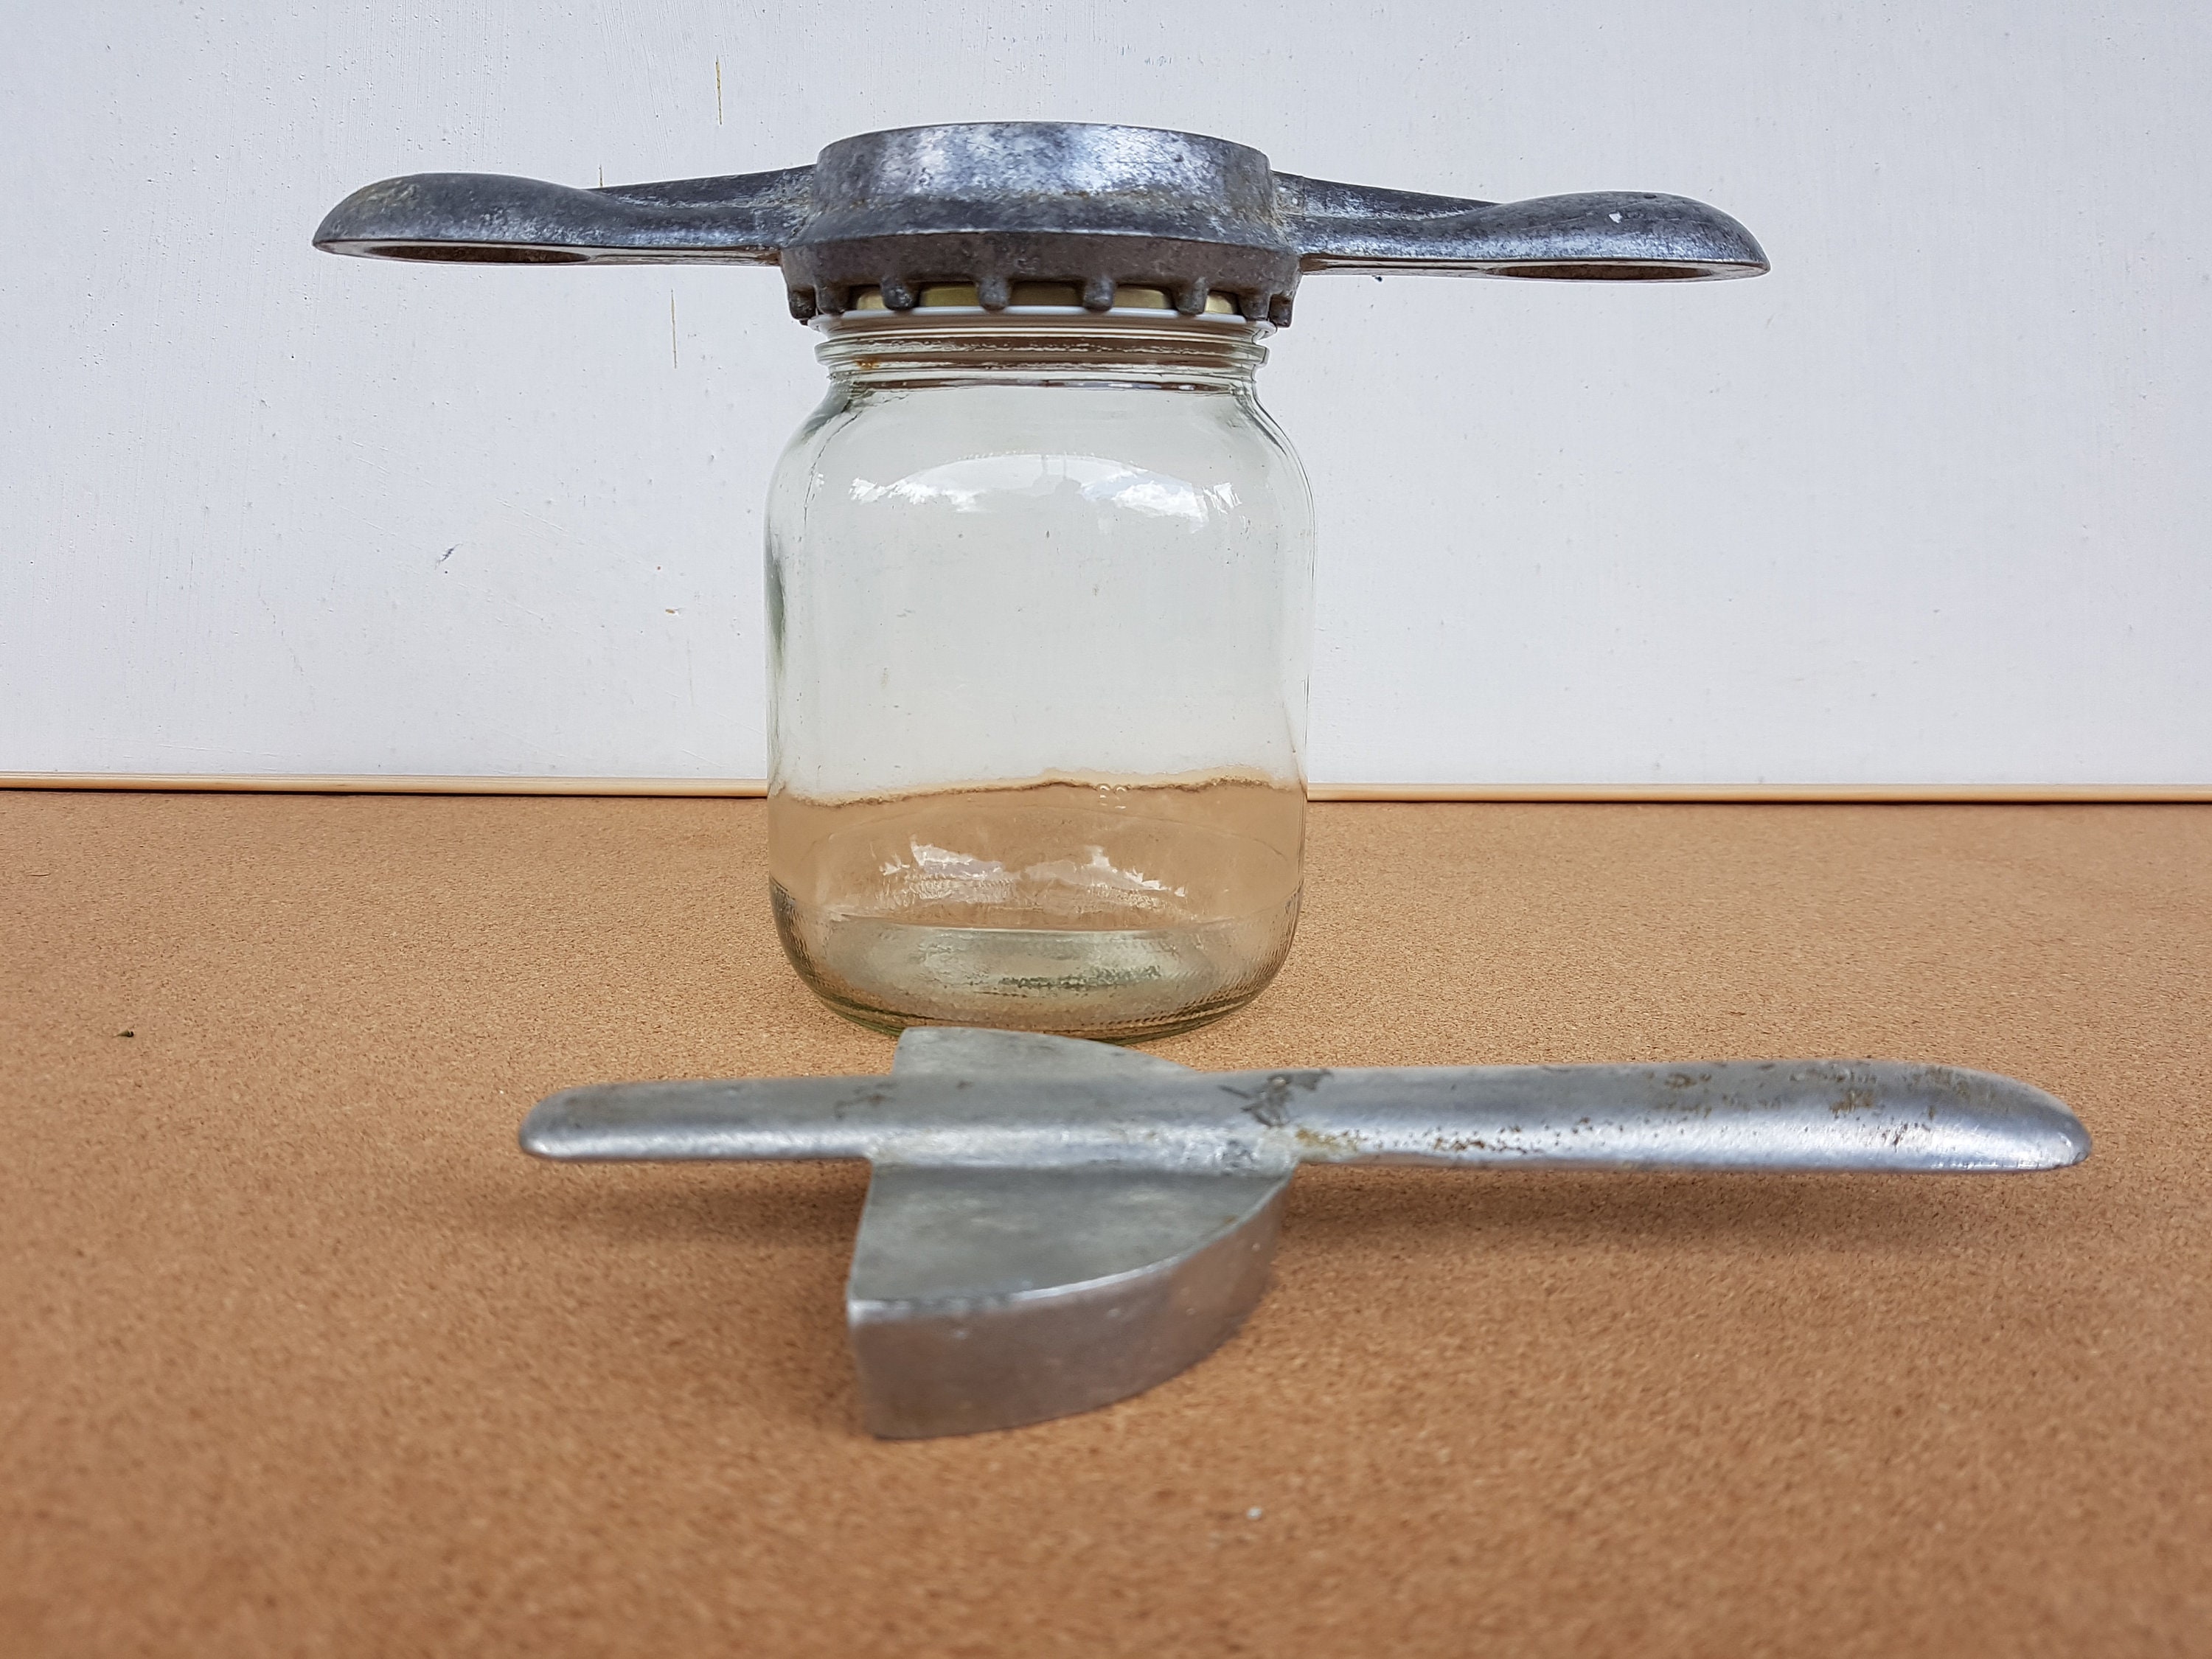 Vintage 1950s Pry-A-Lid Mason Jar Opener Tumbler Bottle Lid Top Remover  Utensil